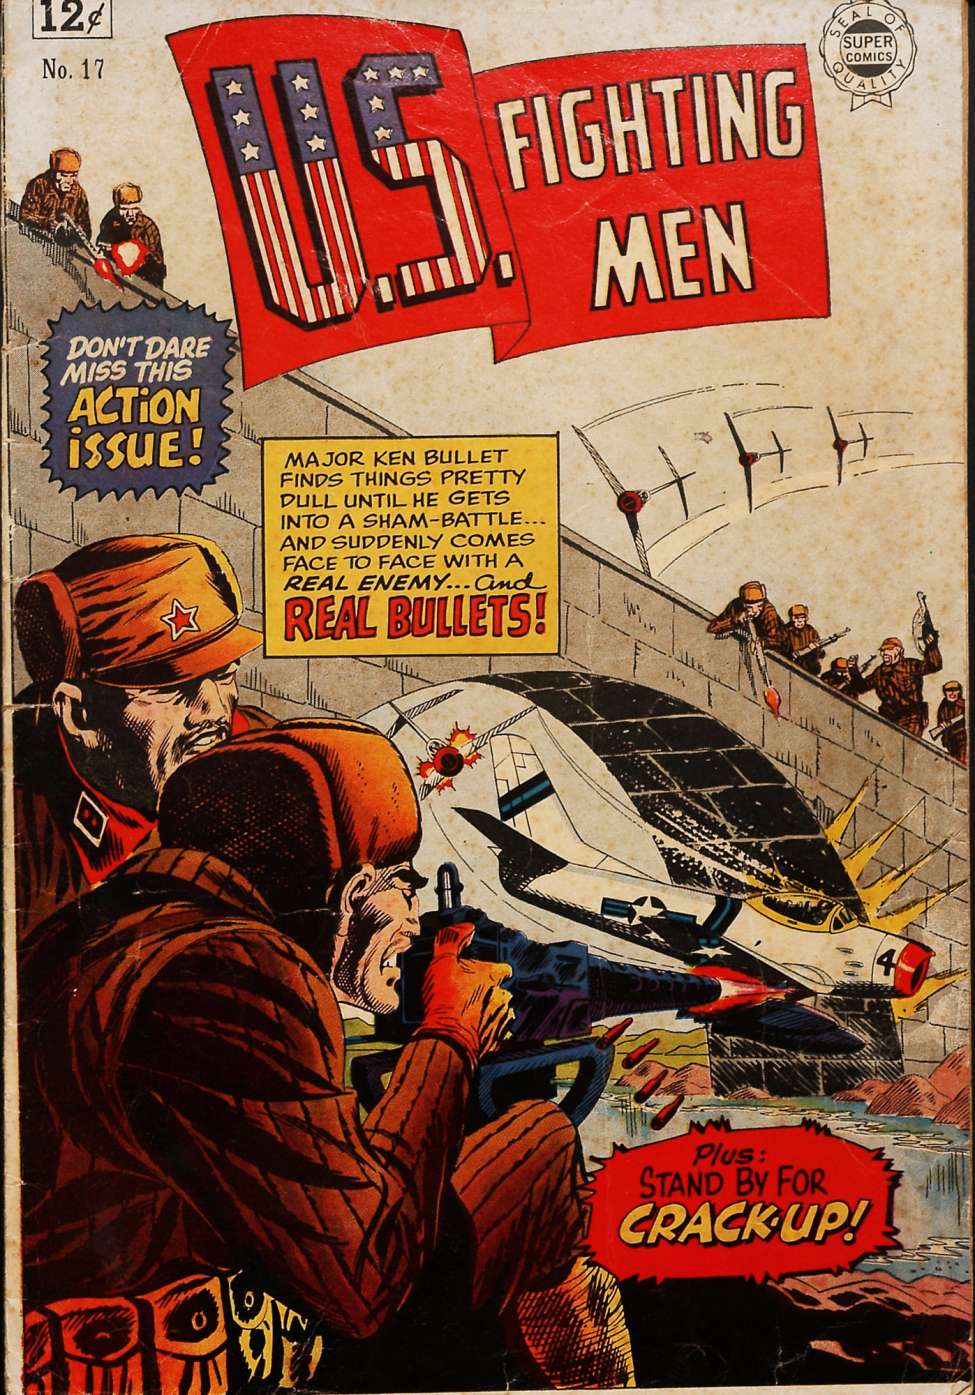 Comic Book Cover For U.S. Fighting Men 17